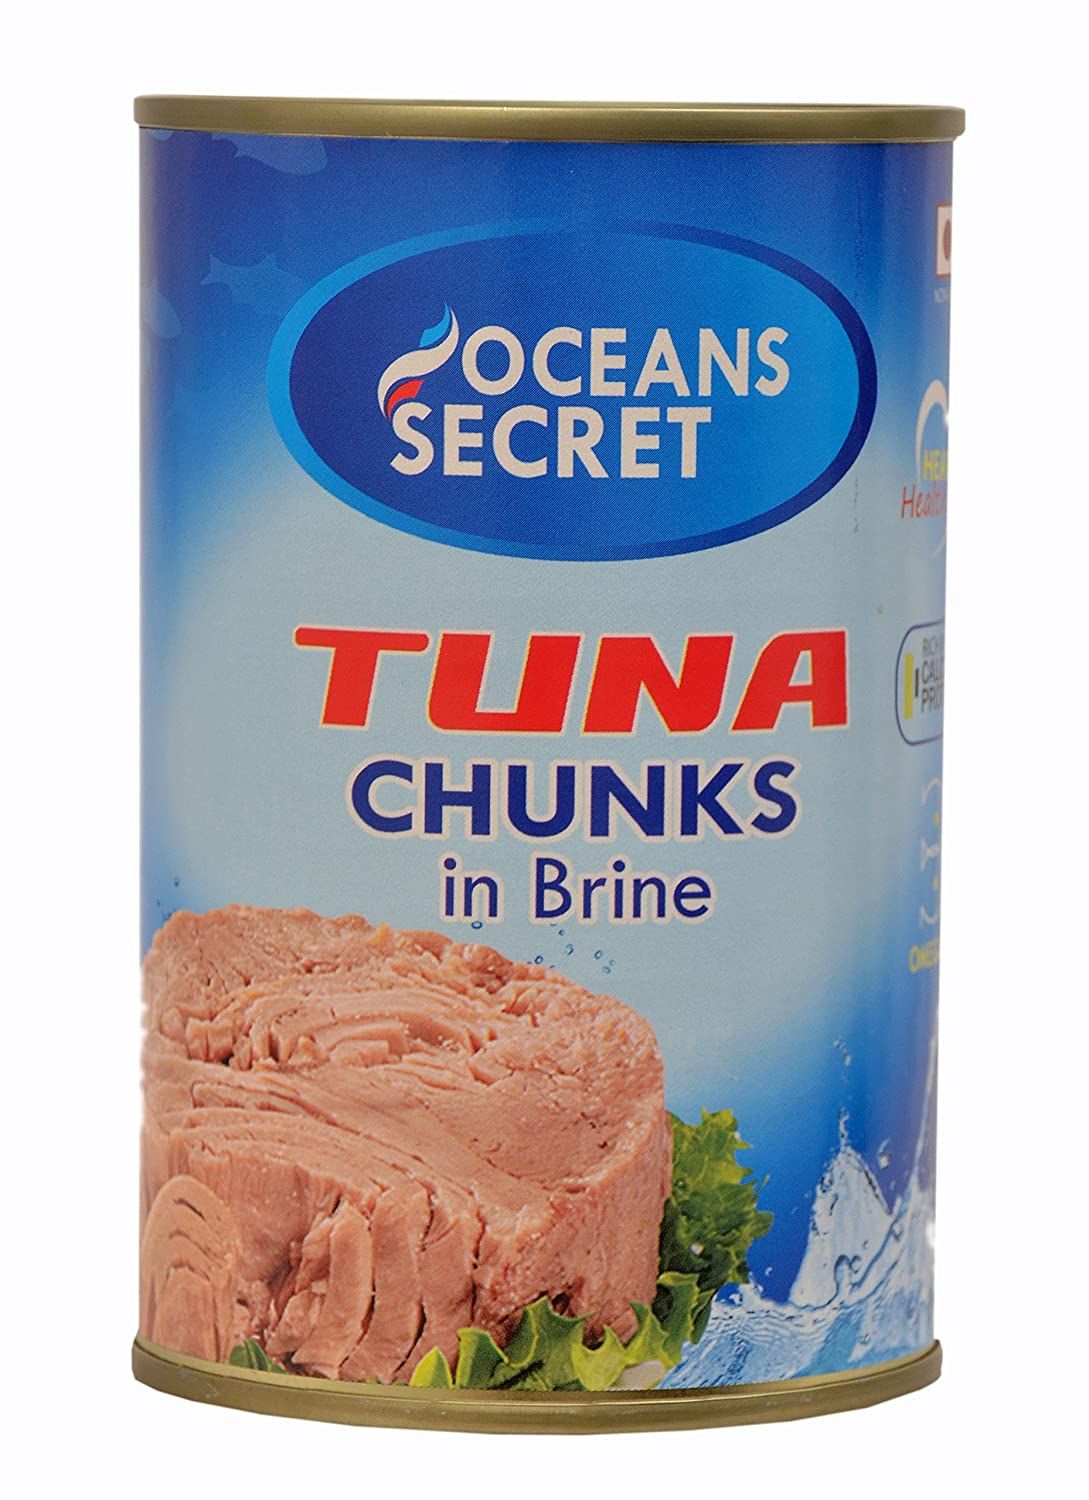 Ocean's Secret Tuna Chunks in Brine Image